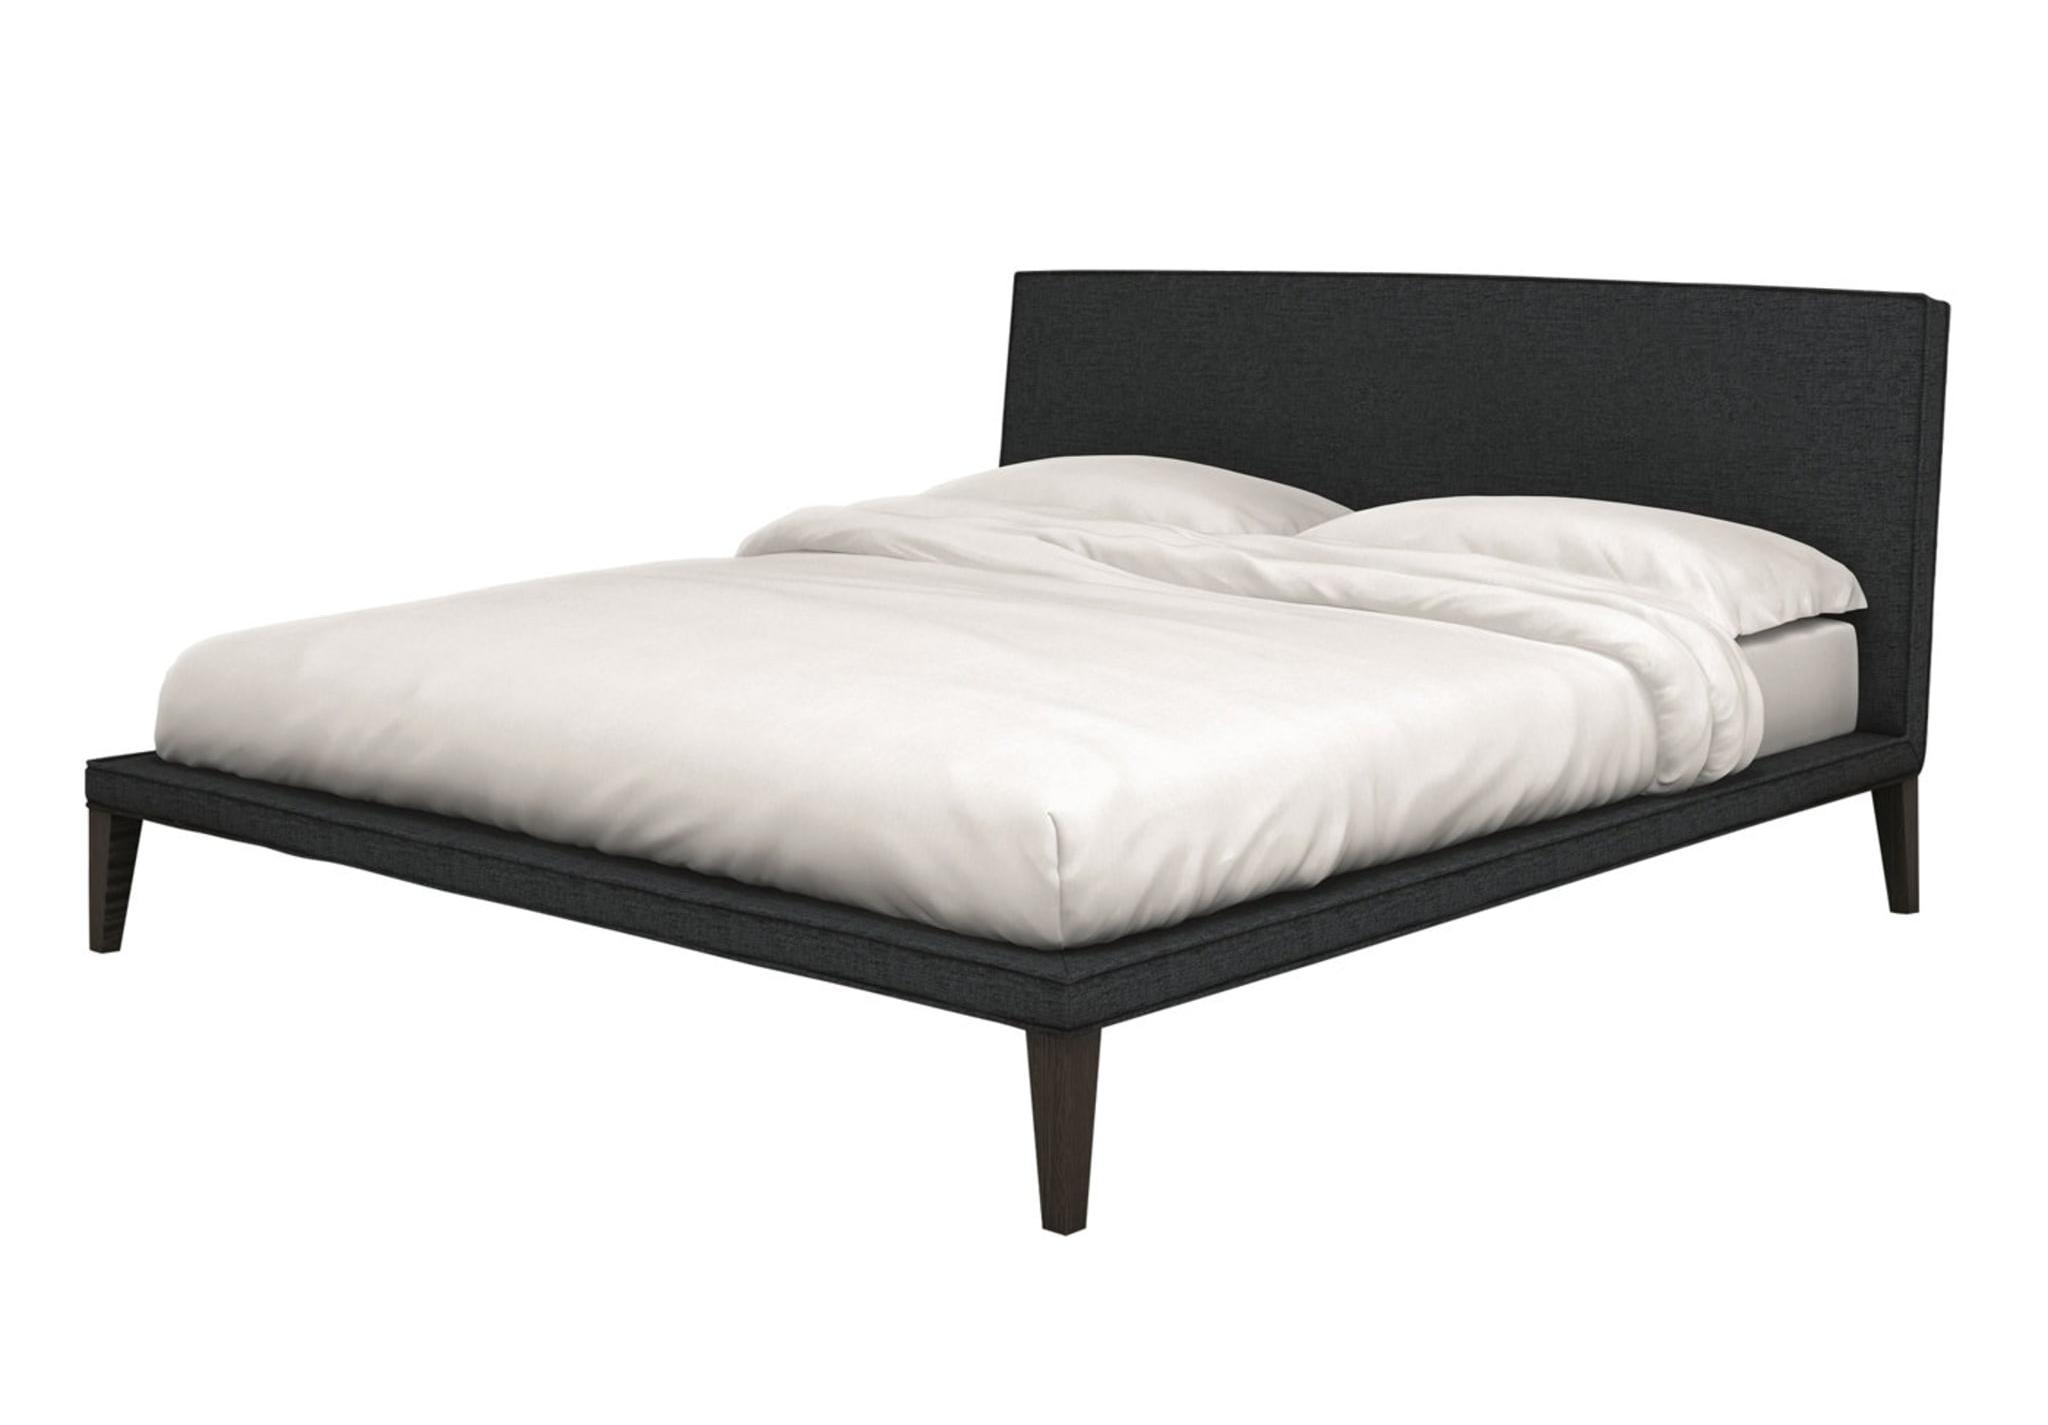 Gilda Italian Handcrafted Luxurious Bed